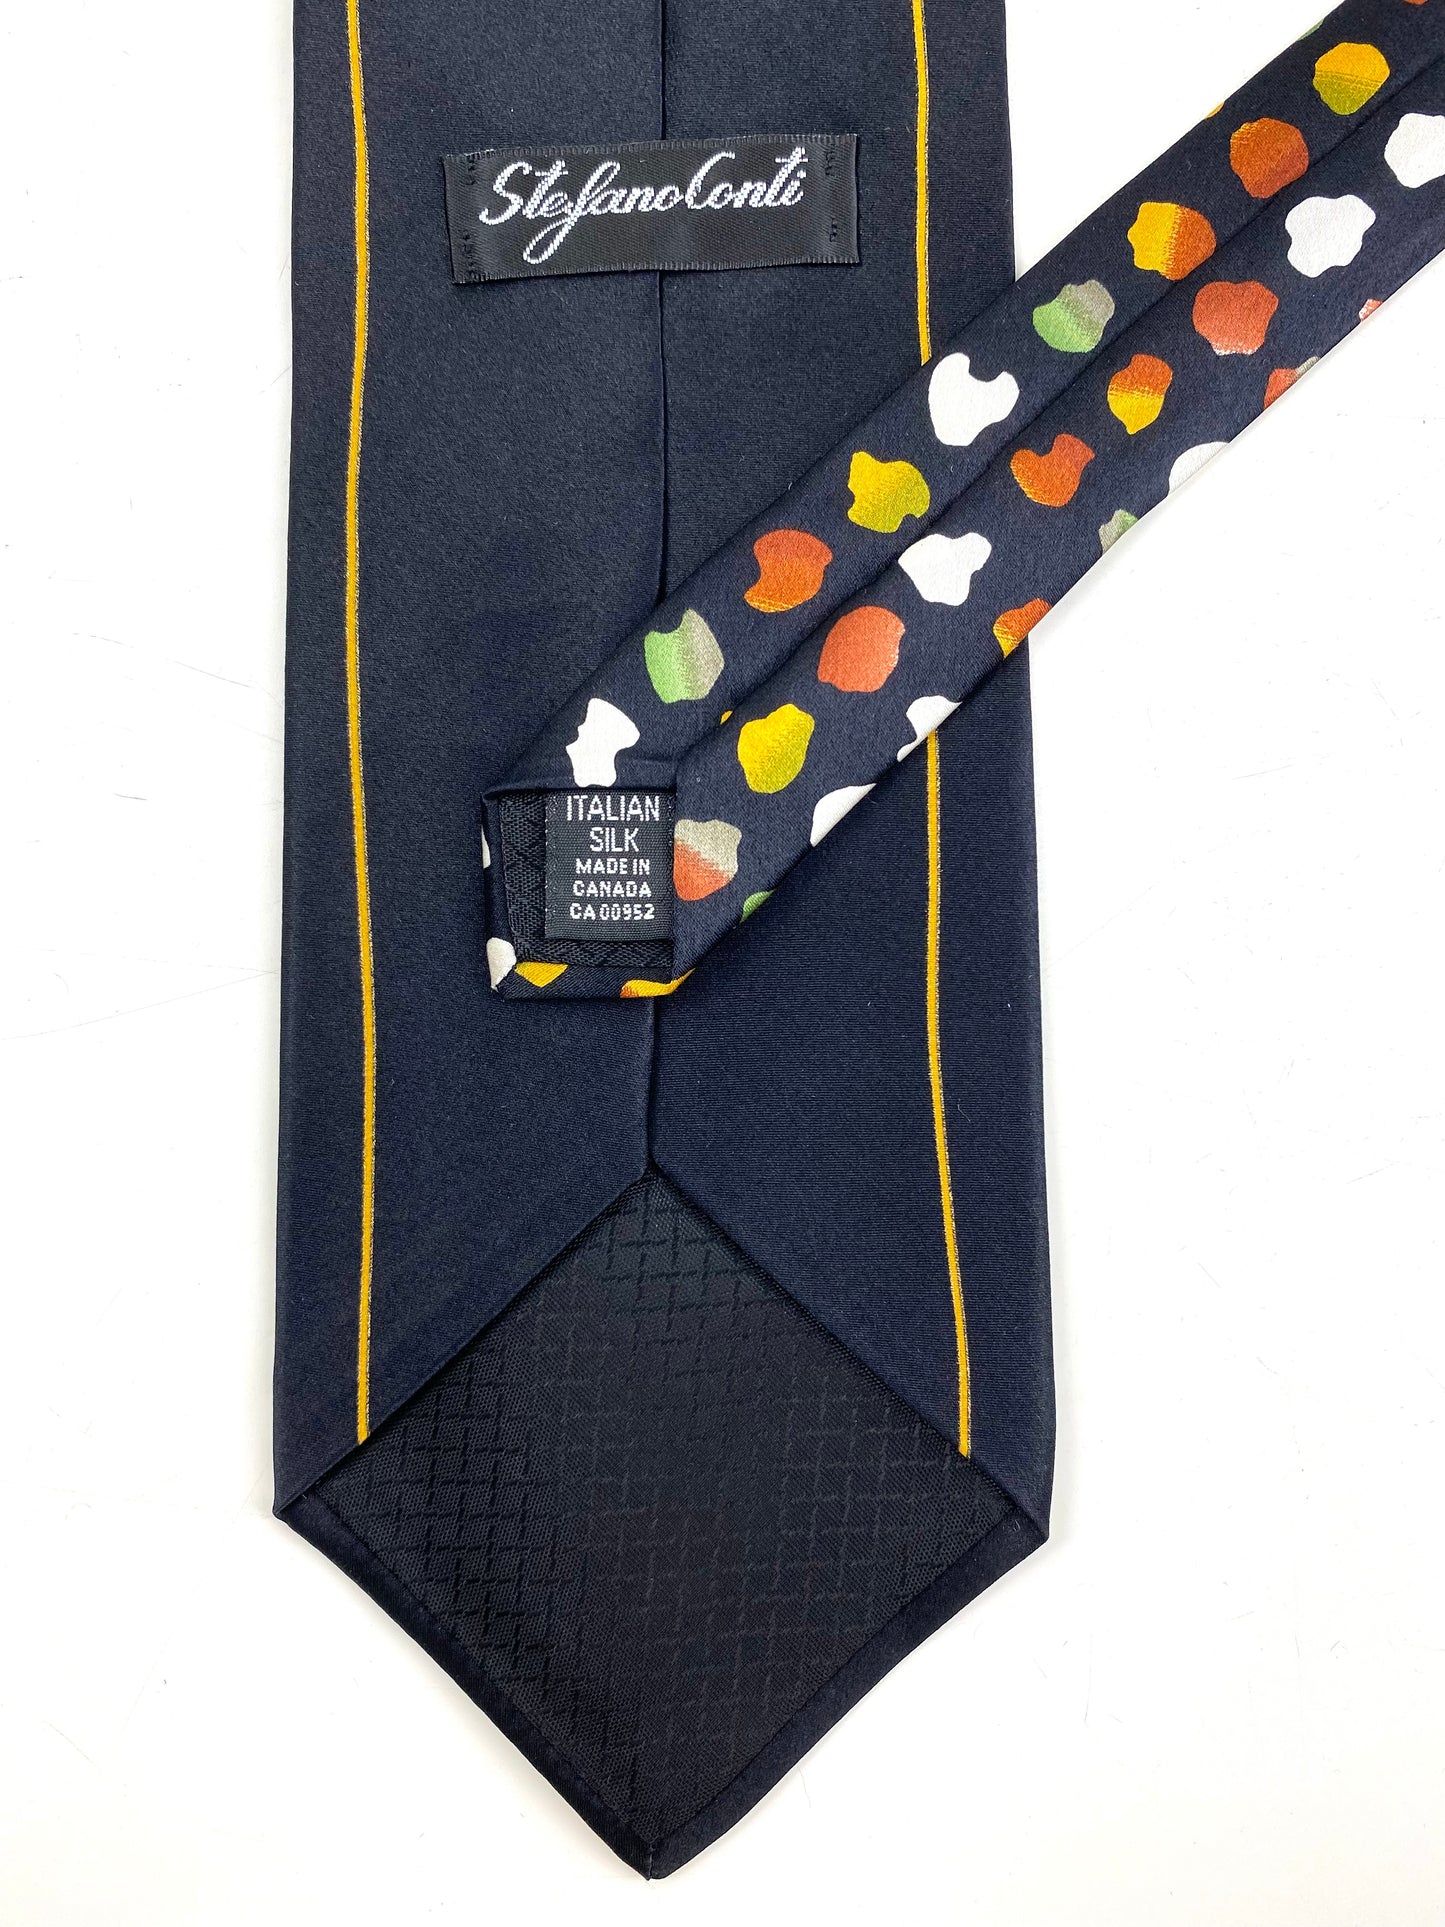 90s Deadstock Silk Necktie, Men's Vintage Black/ Rusty Brown/ Yellow Abstract Blot Pattern Tie, NOS